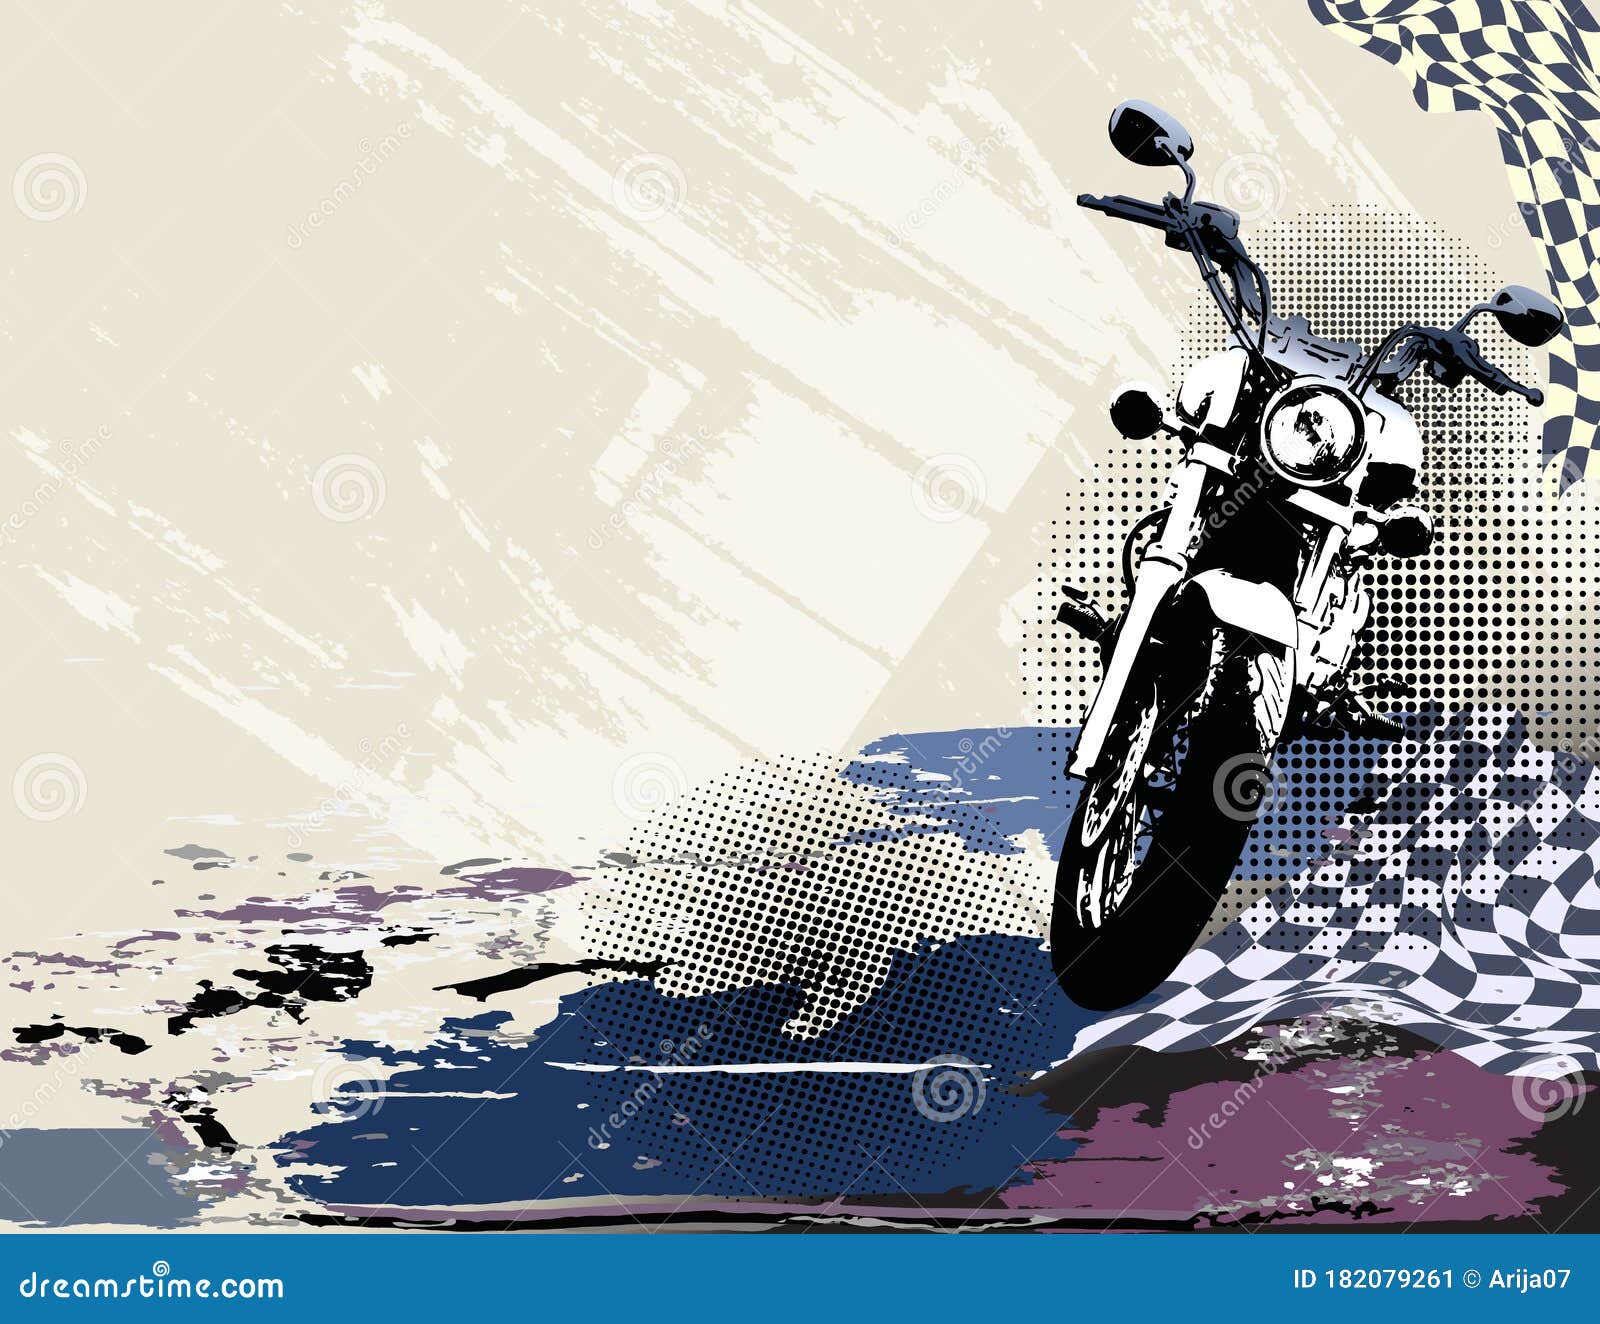 Corrida De Motos - Arte vetorial de stock e mais imagens de Motorizada -  Motorizada, Desporto de Competição - Desporto, Desporto Motorizado - iStock